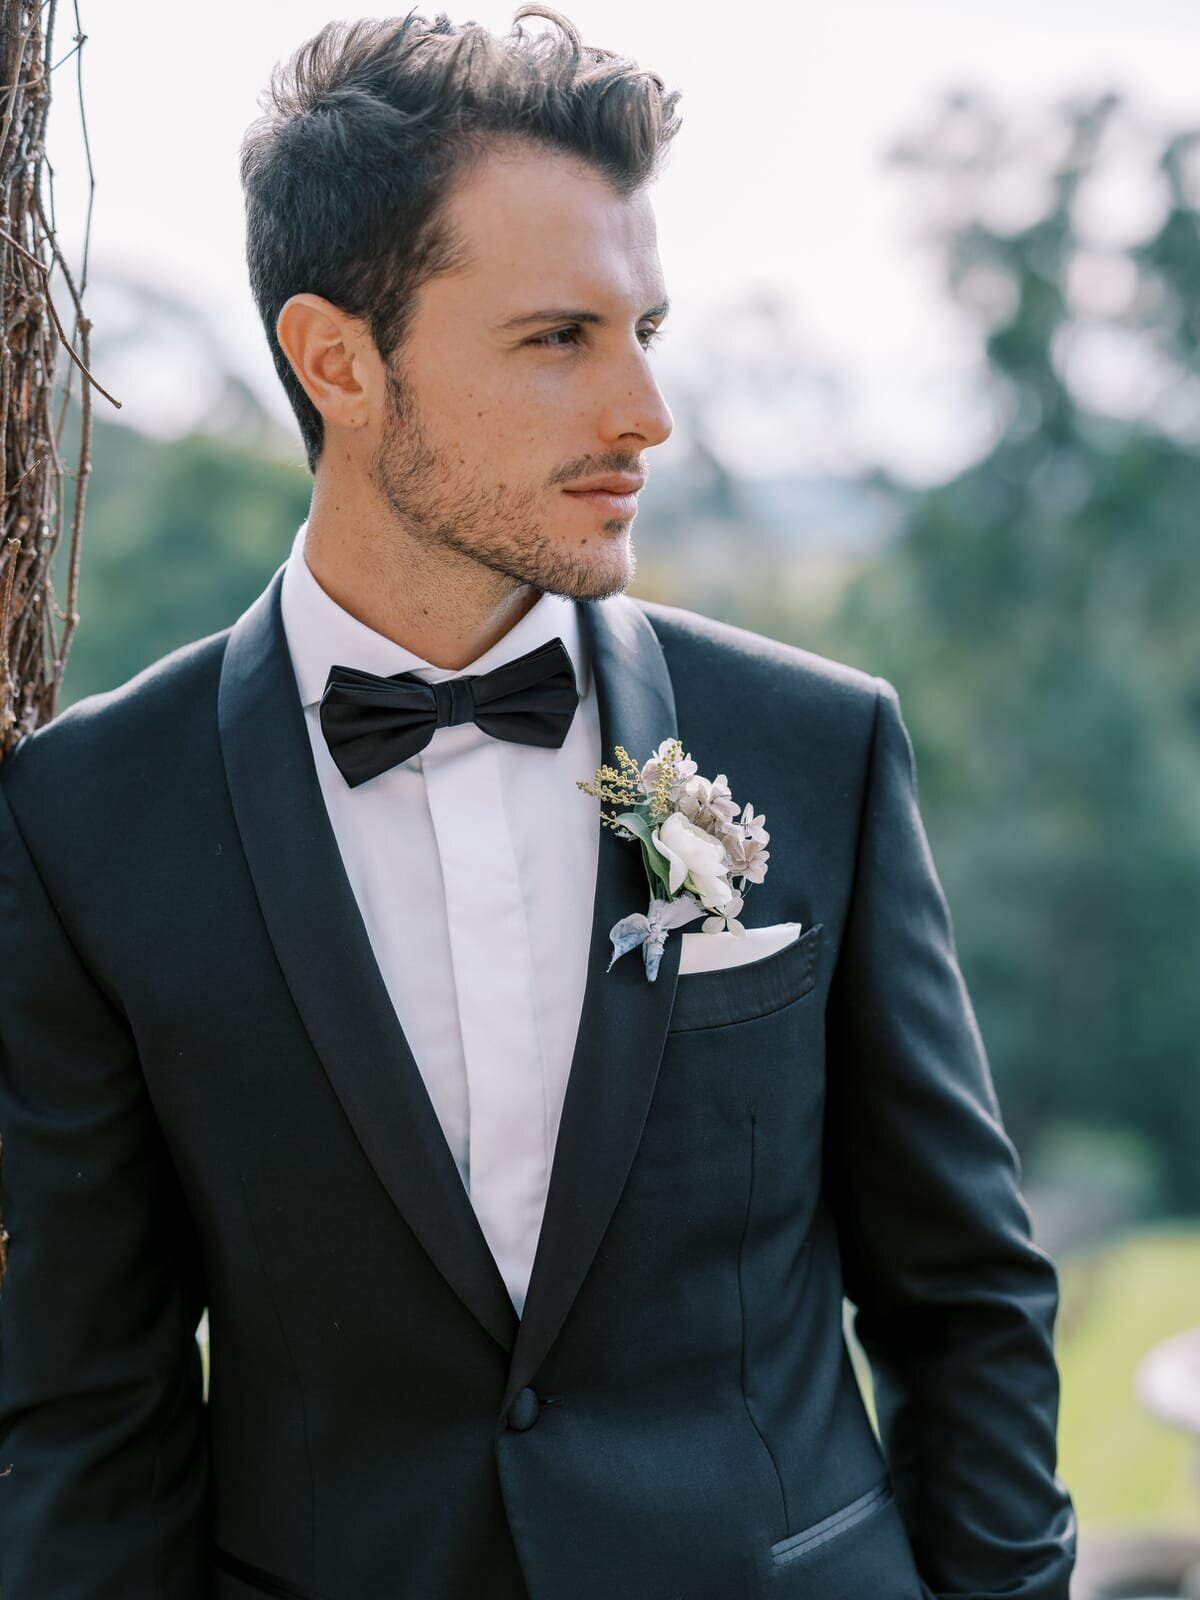 Serenity-photography-groom-attire-YSG-tailors-13